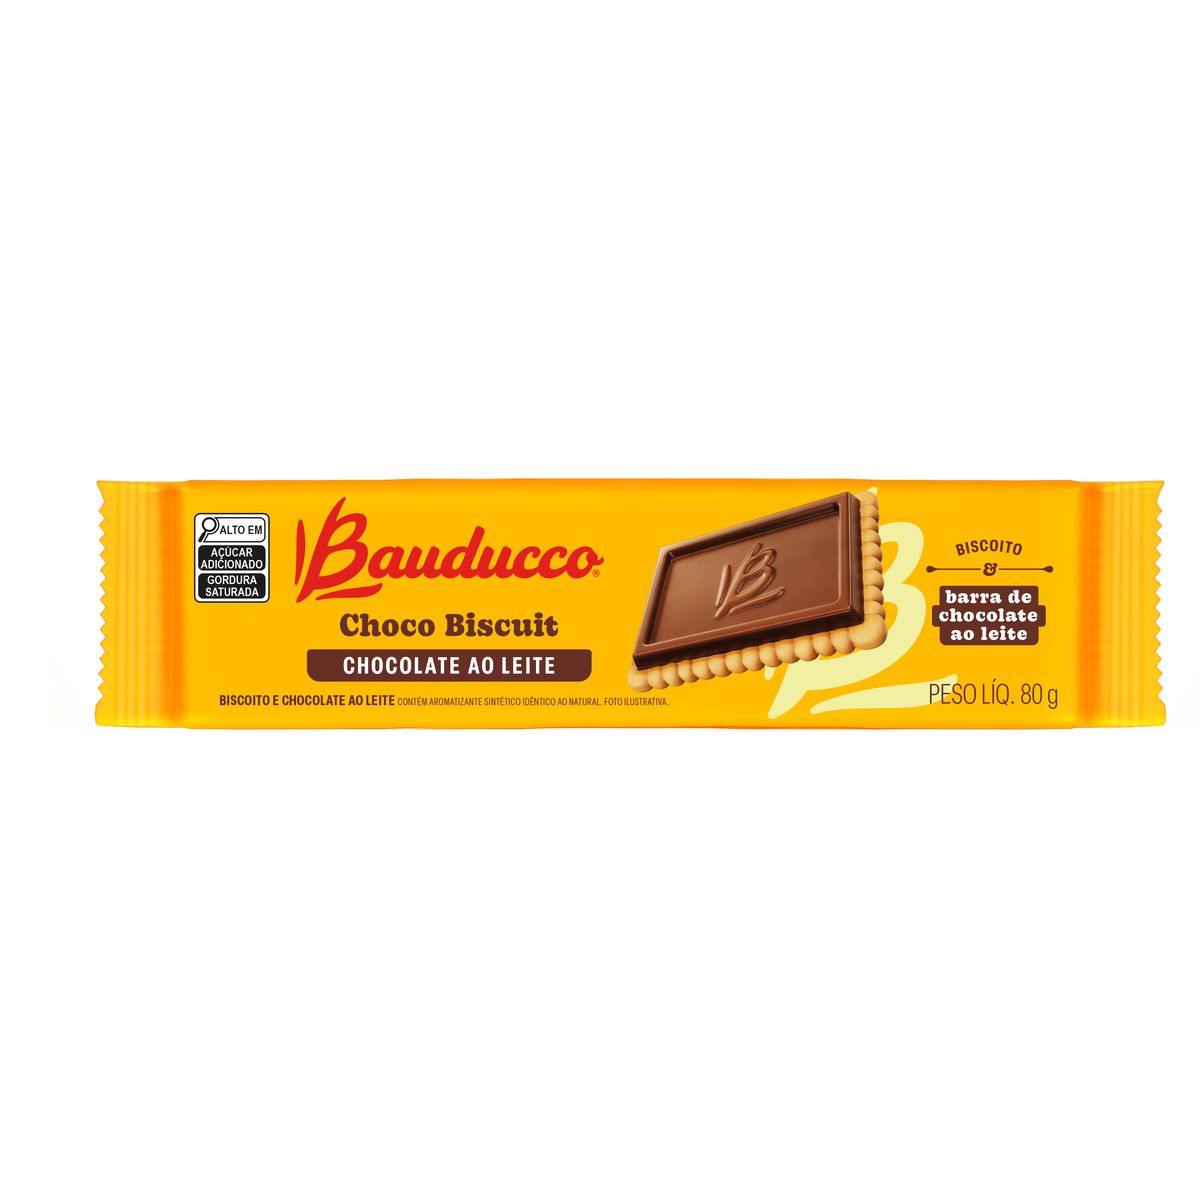 Biscoito Bauducco Choco Biscuit Chocolate ao Leite 80g